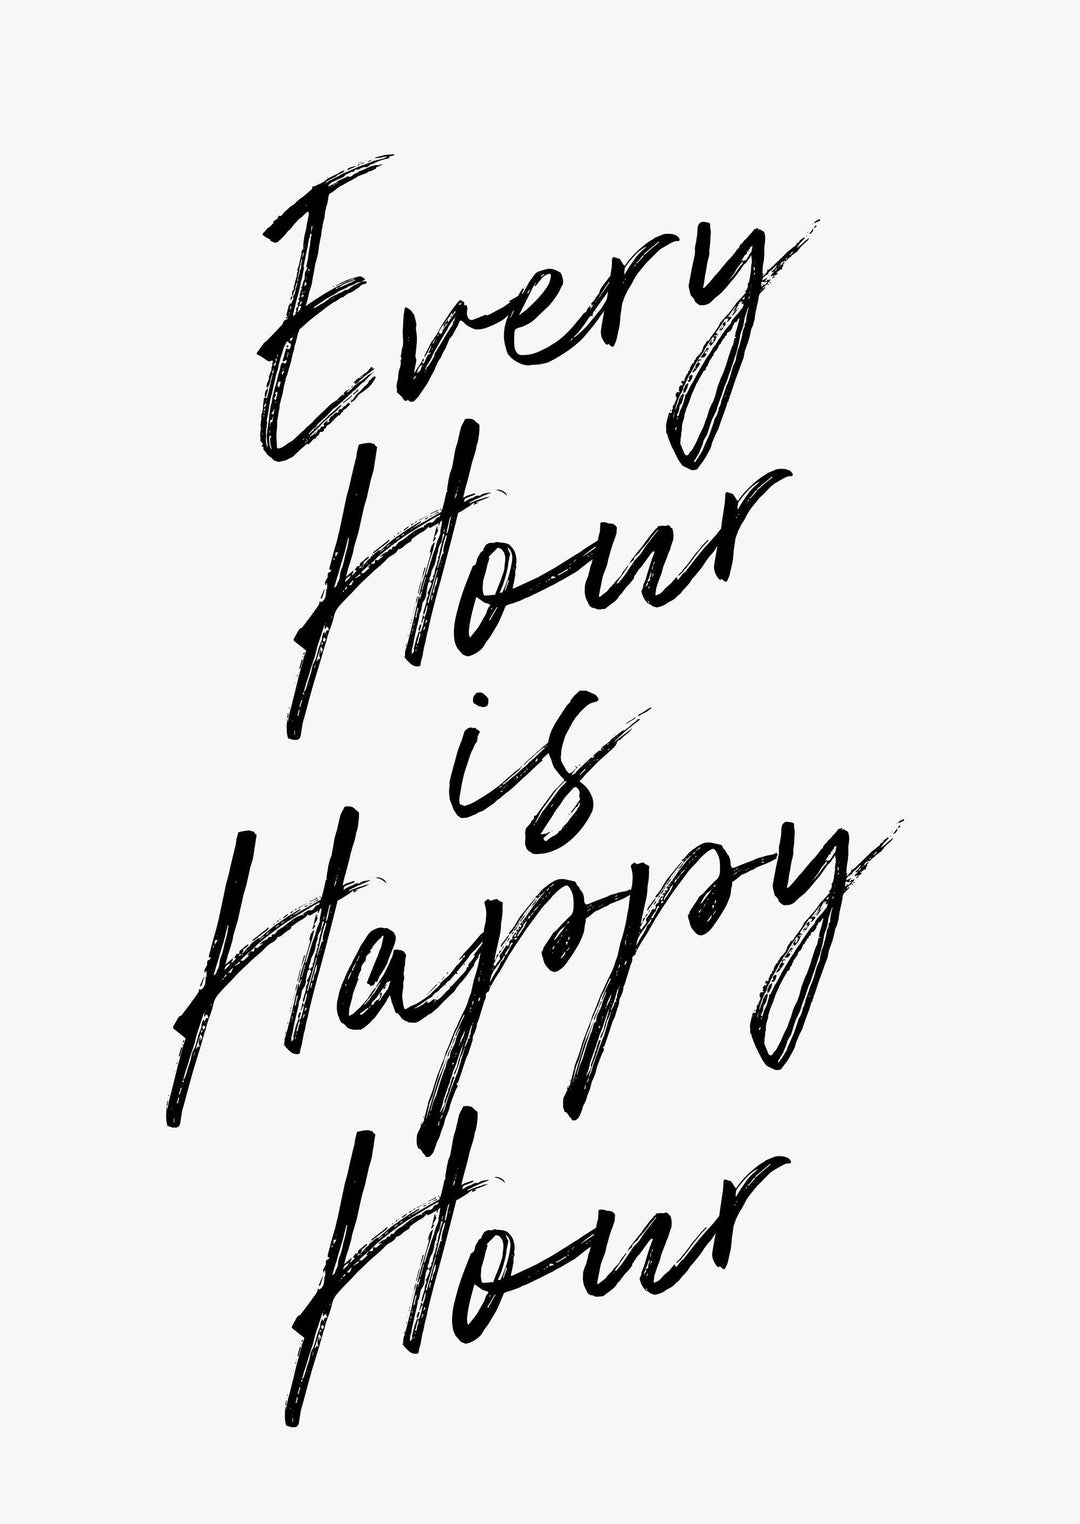 Typografisches Wandbild 'Happy Hour 2.0'